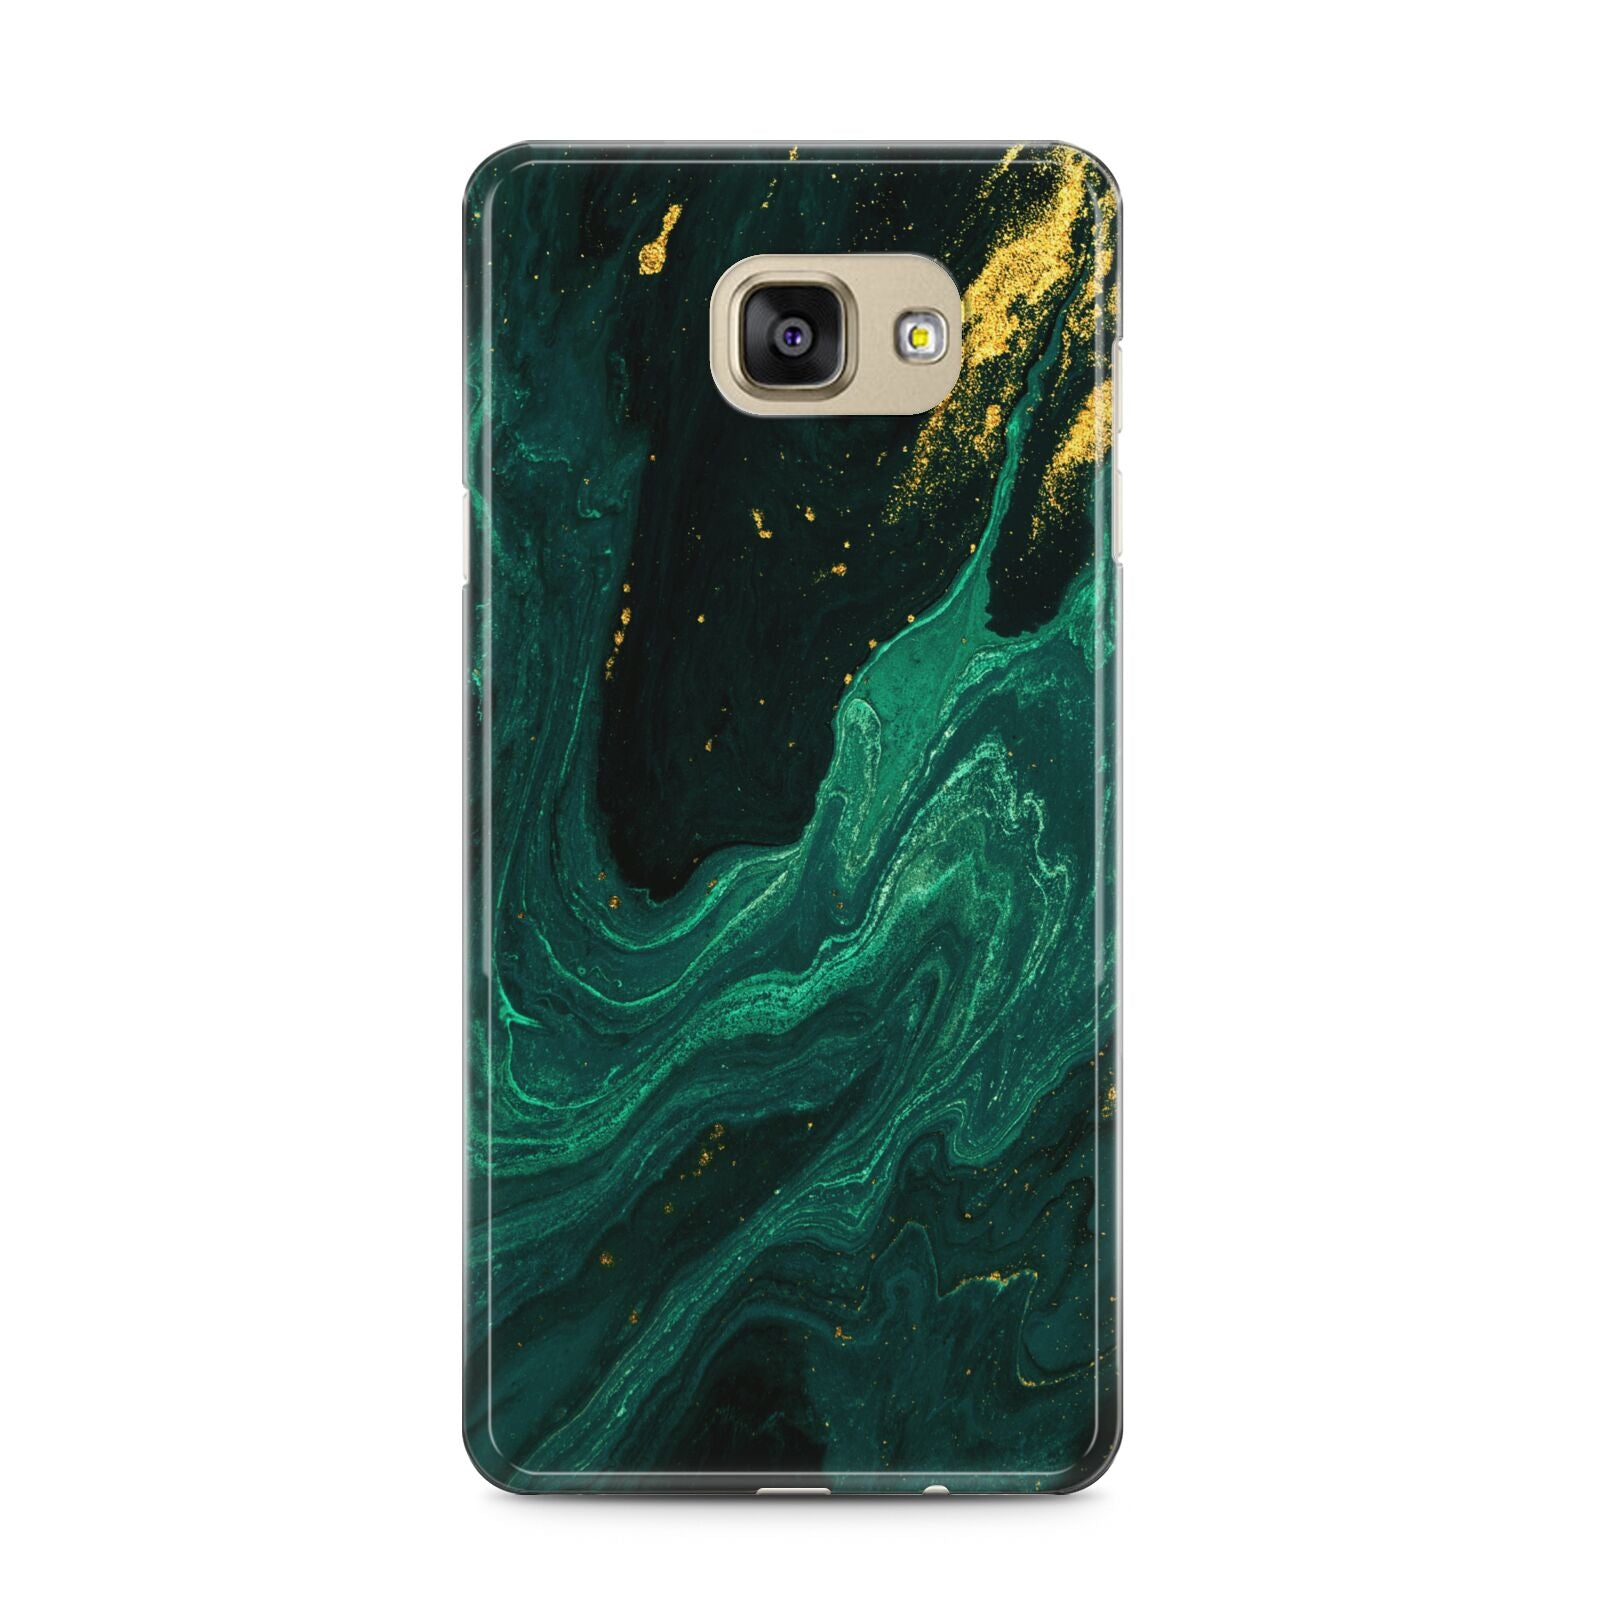 Emerald Green Samsung Galaxy A5 2016 Case on gold phone